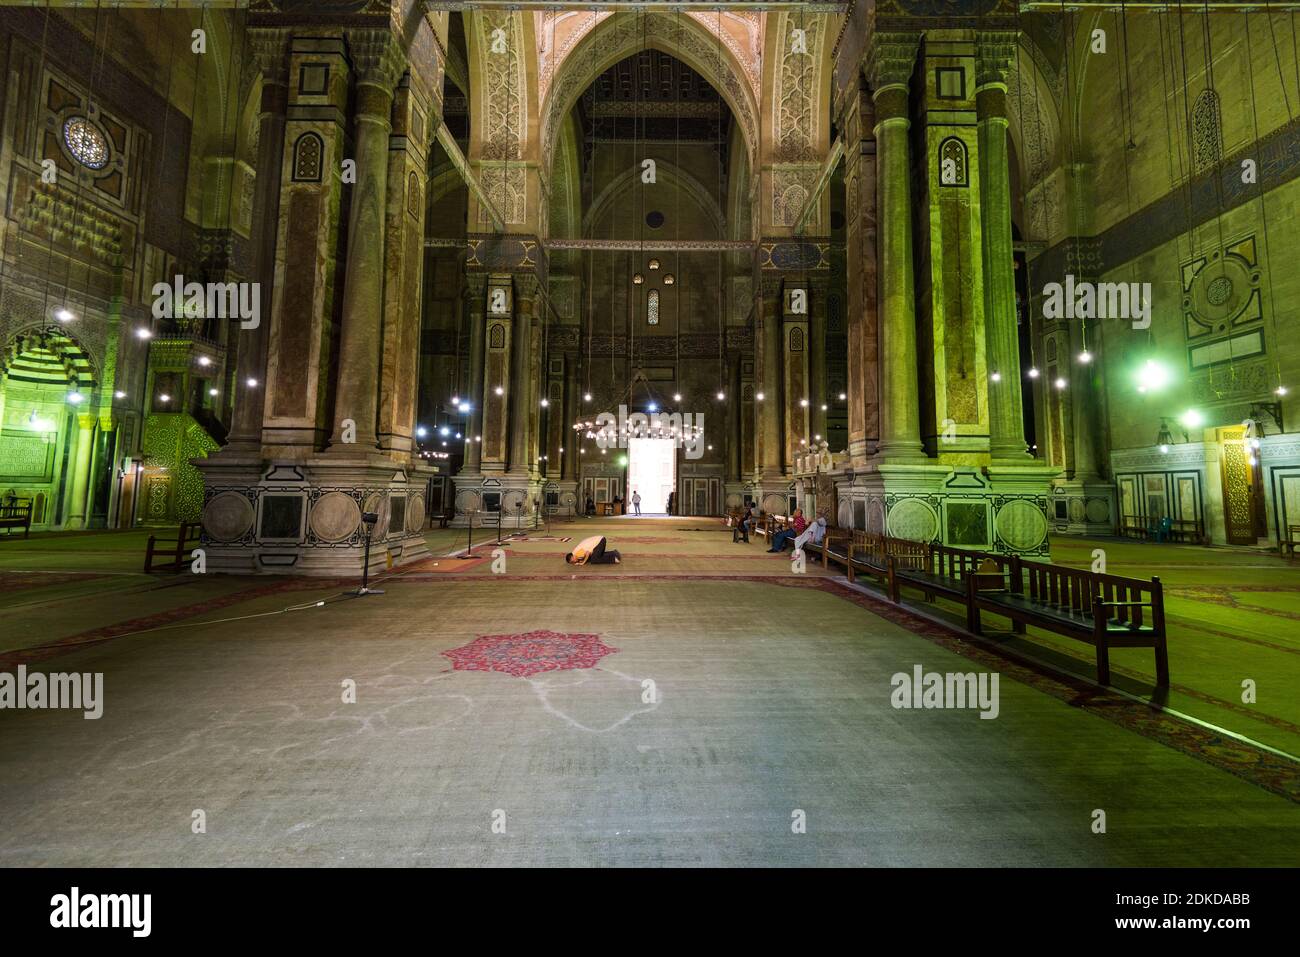 Interiors of the Mosque of Al Rifai (Al-Refai, Al-Refa'i or the Refaai Mosque), adjacent to the Cairo Citadel in Egypt, opposite the Mosque-Madrassa o Stock Photo